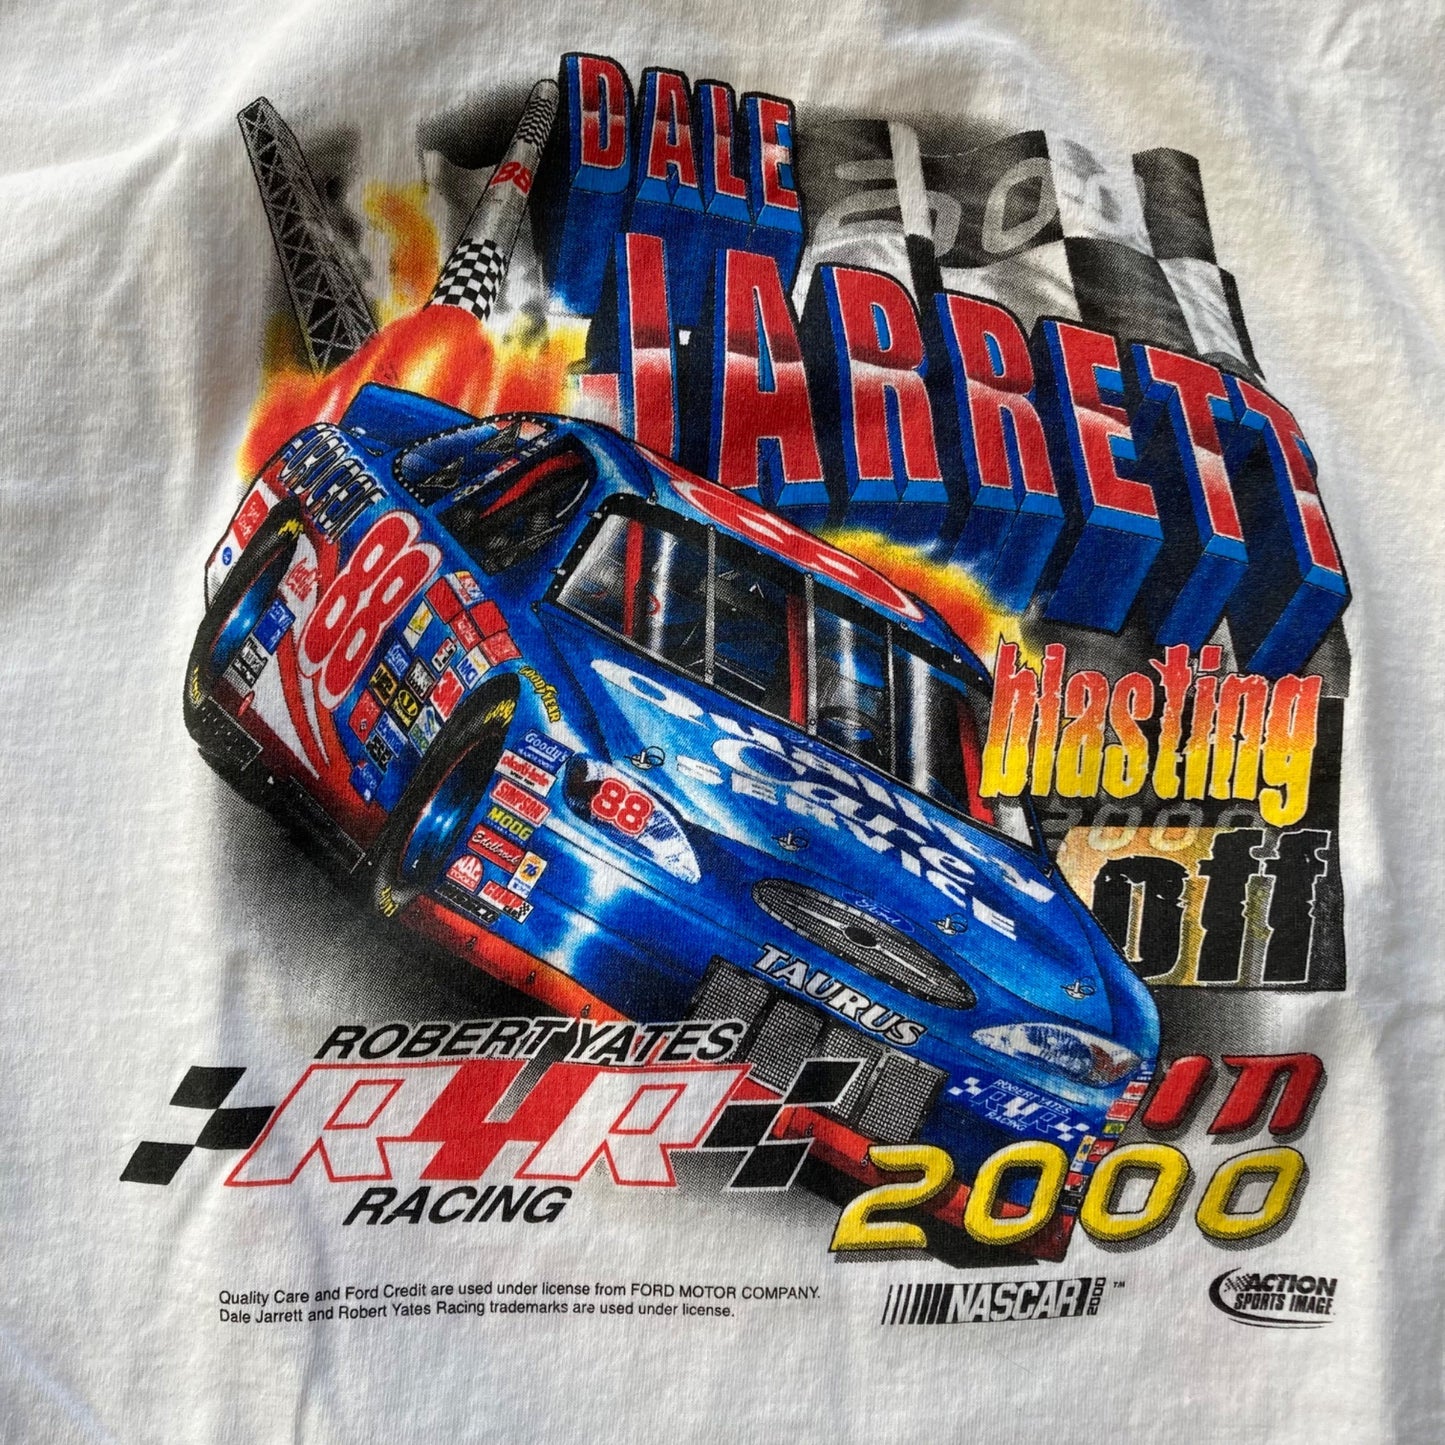 Vintage Dale Jarrett DJ's Rocket NASCAR T-Shirt Youth Size L Ford #88 RYR 2000